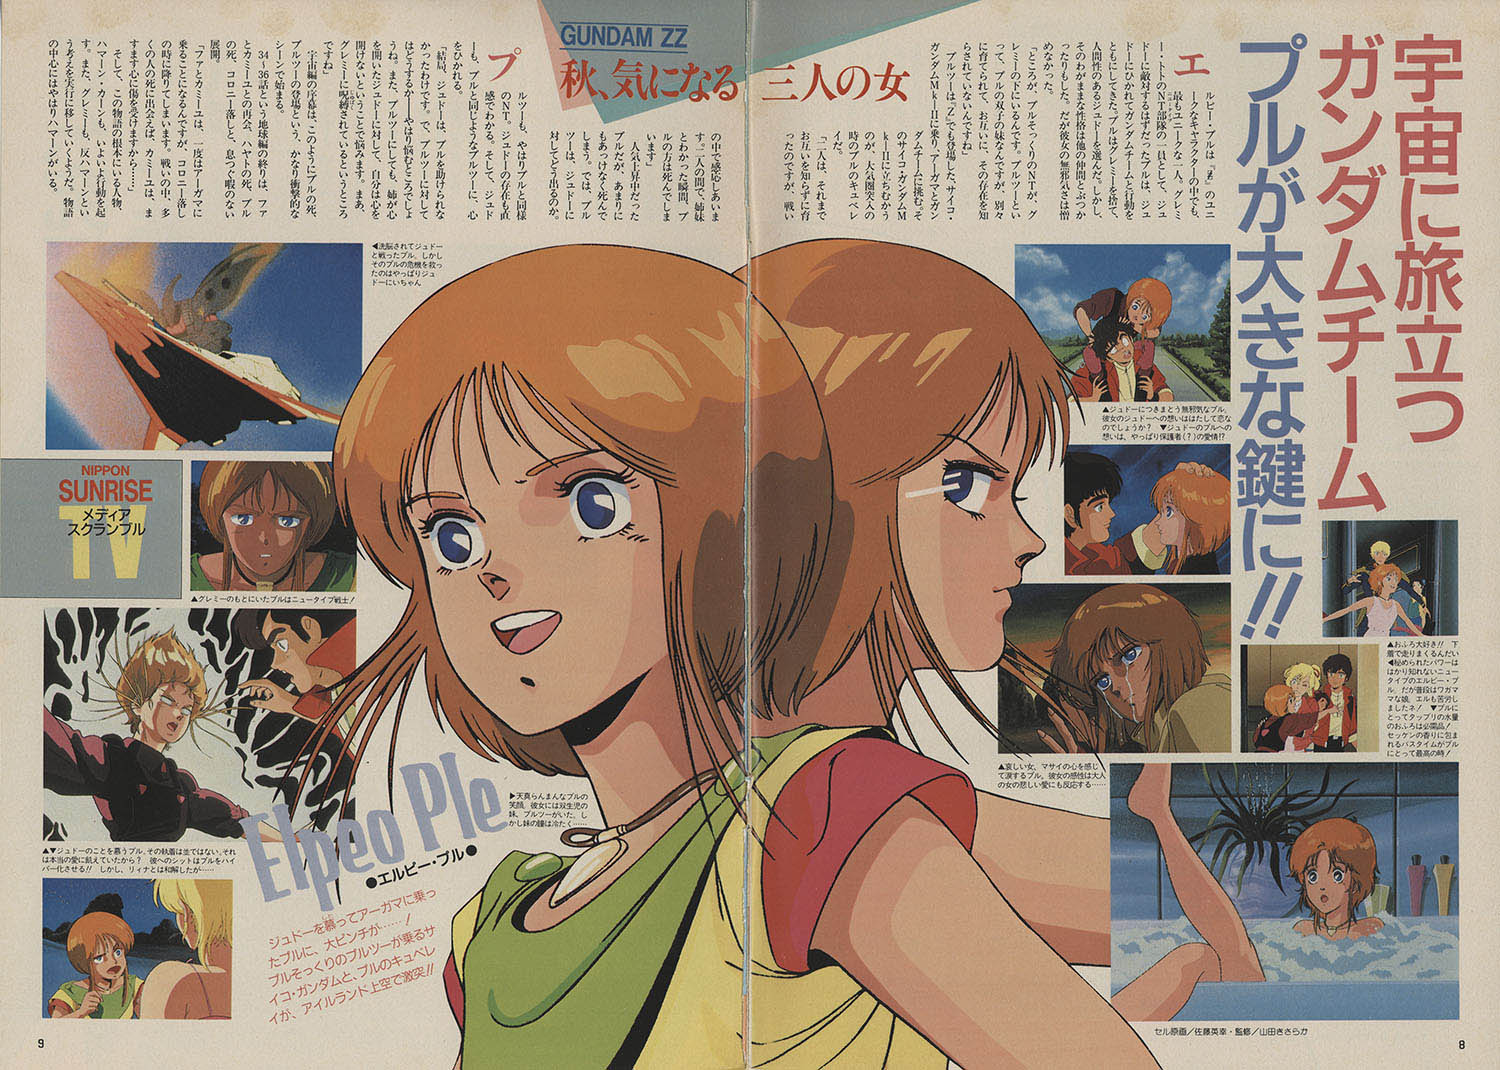 Animedia Gundam Zz Article Scrap 1986 S61 02 To 1987 S62 04 Mobile Suit Gundam Zz Part 1 Mobile Suit Gundam Zz Part 2